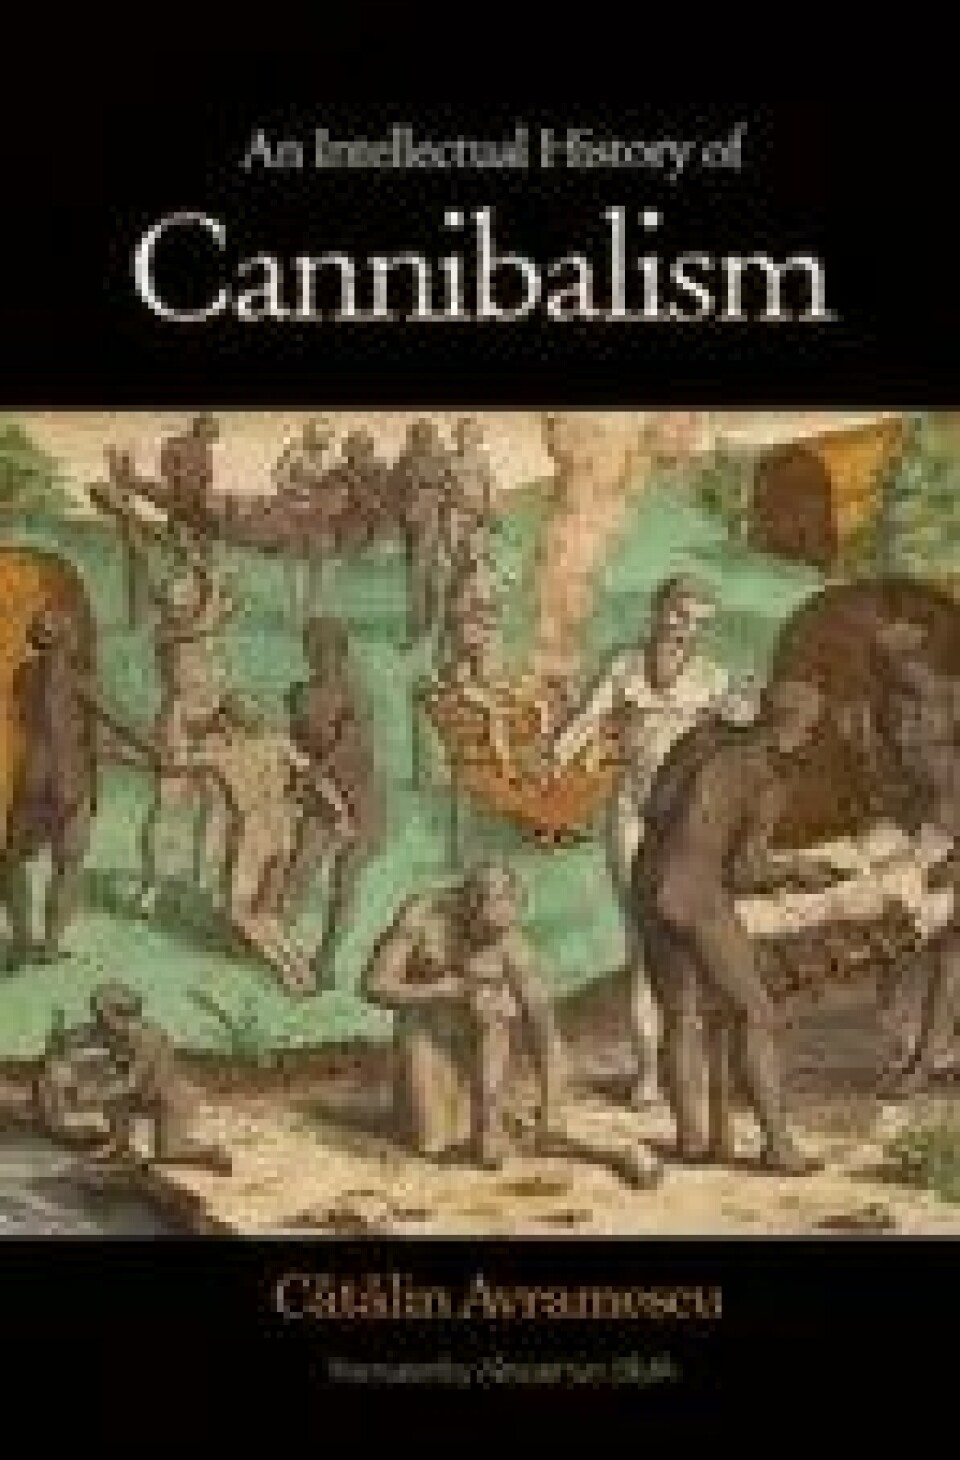 Bok: An Intellectual History of Cannibalism – Cătălin Avramescu